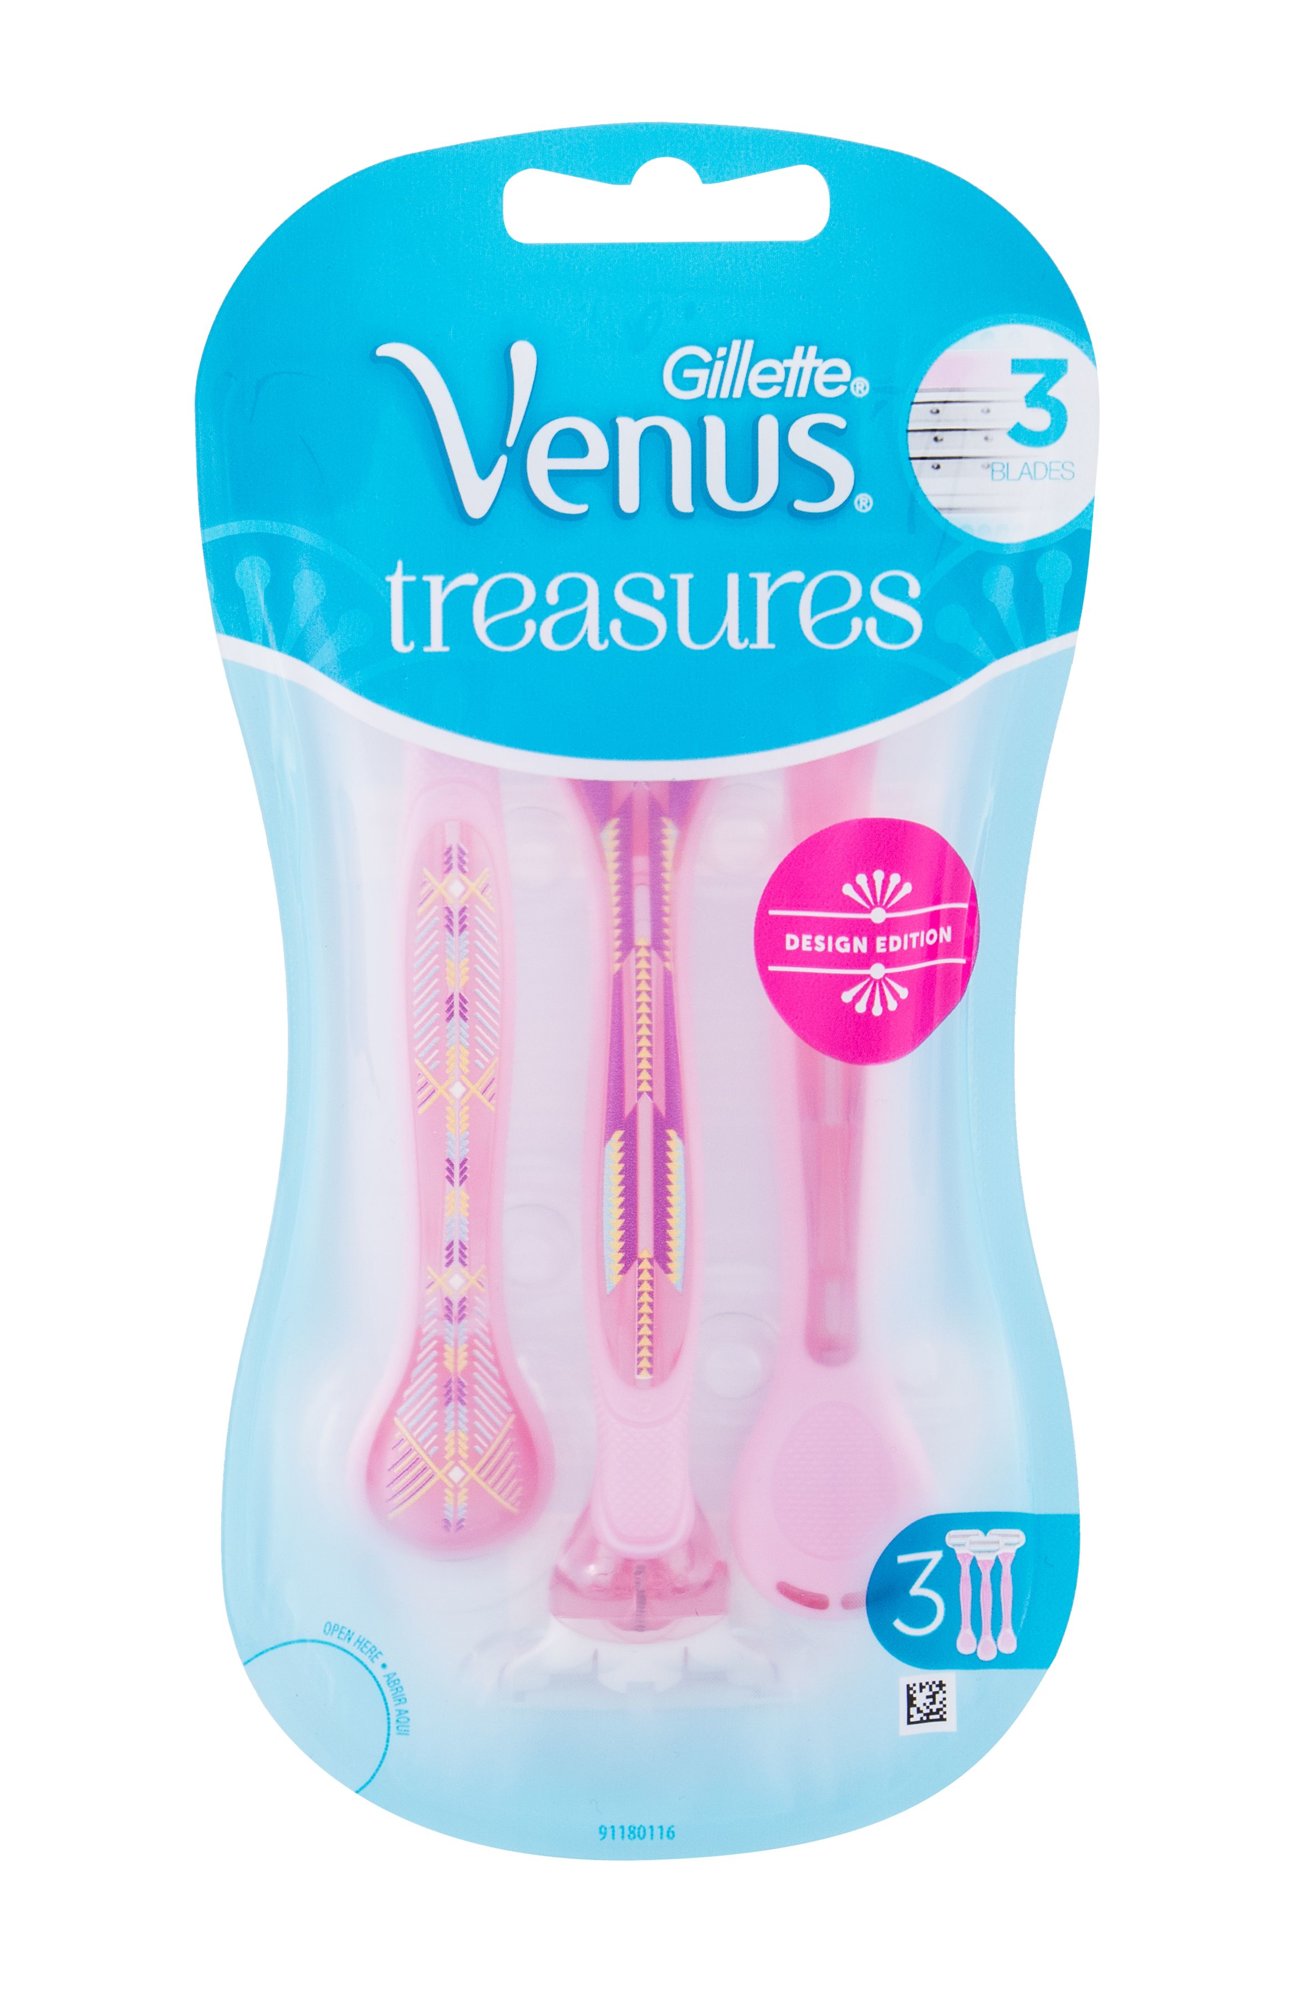 Gillette Venus Treasures Collection skustuvas